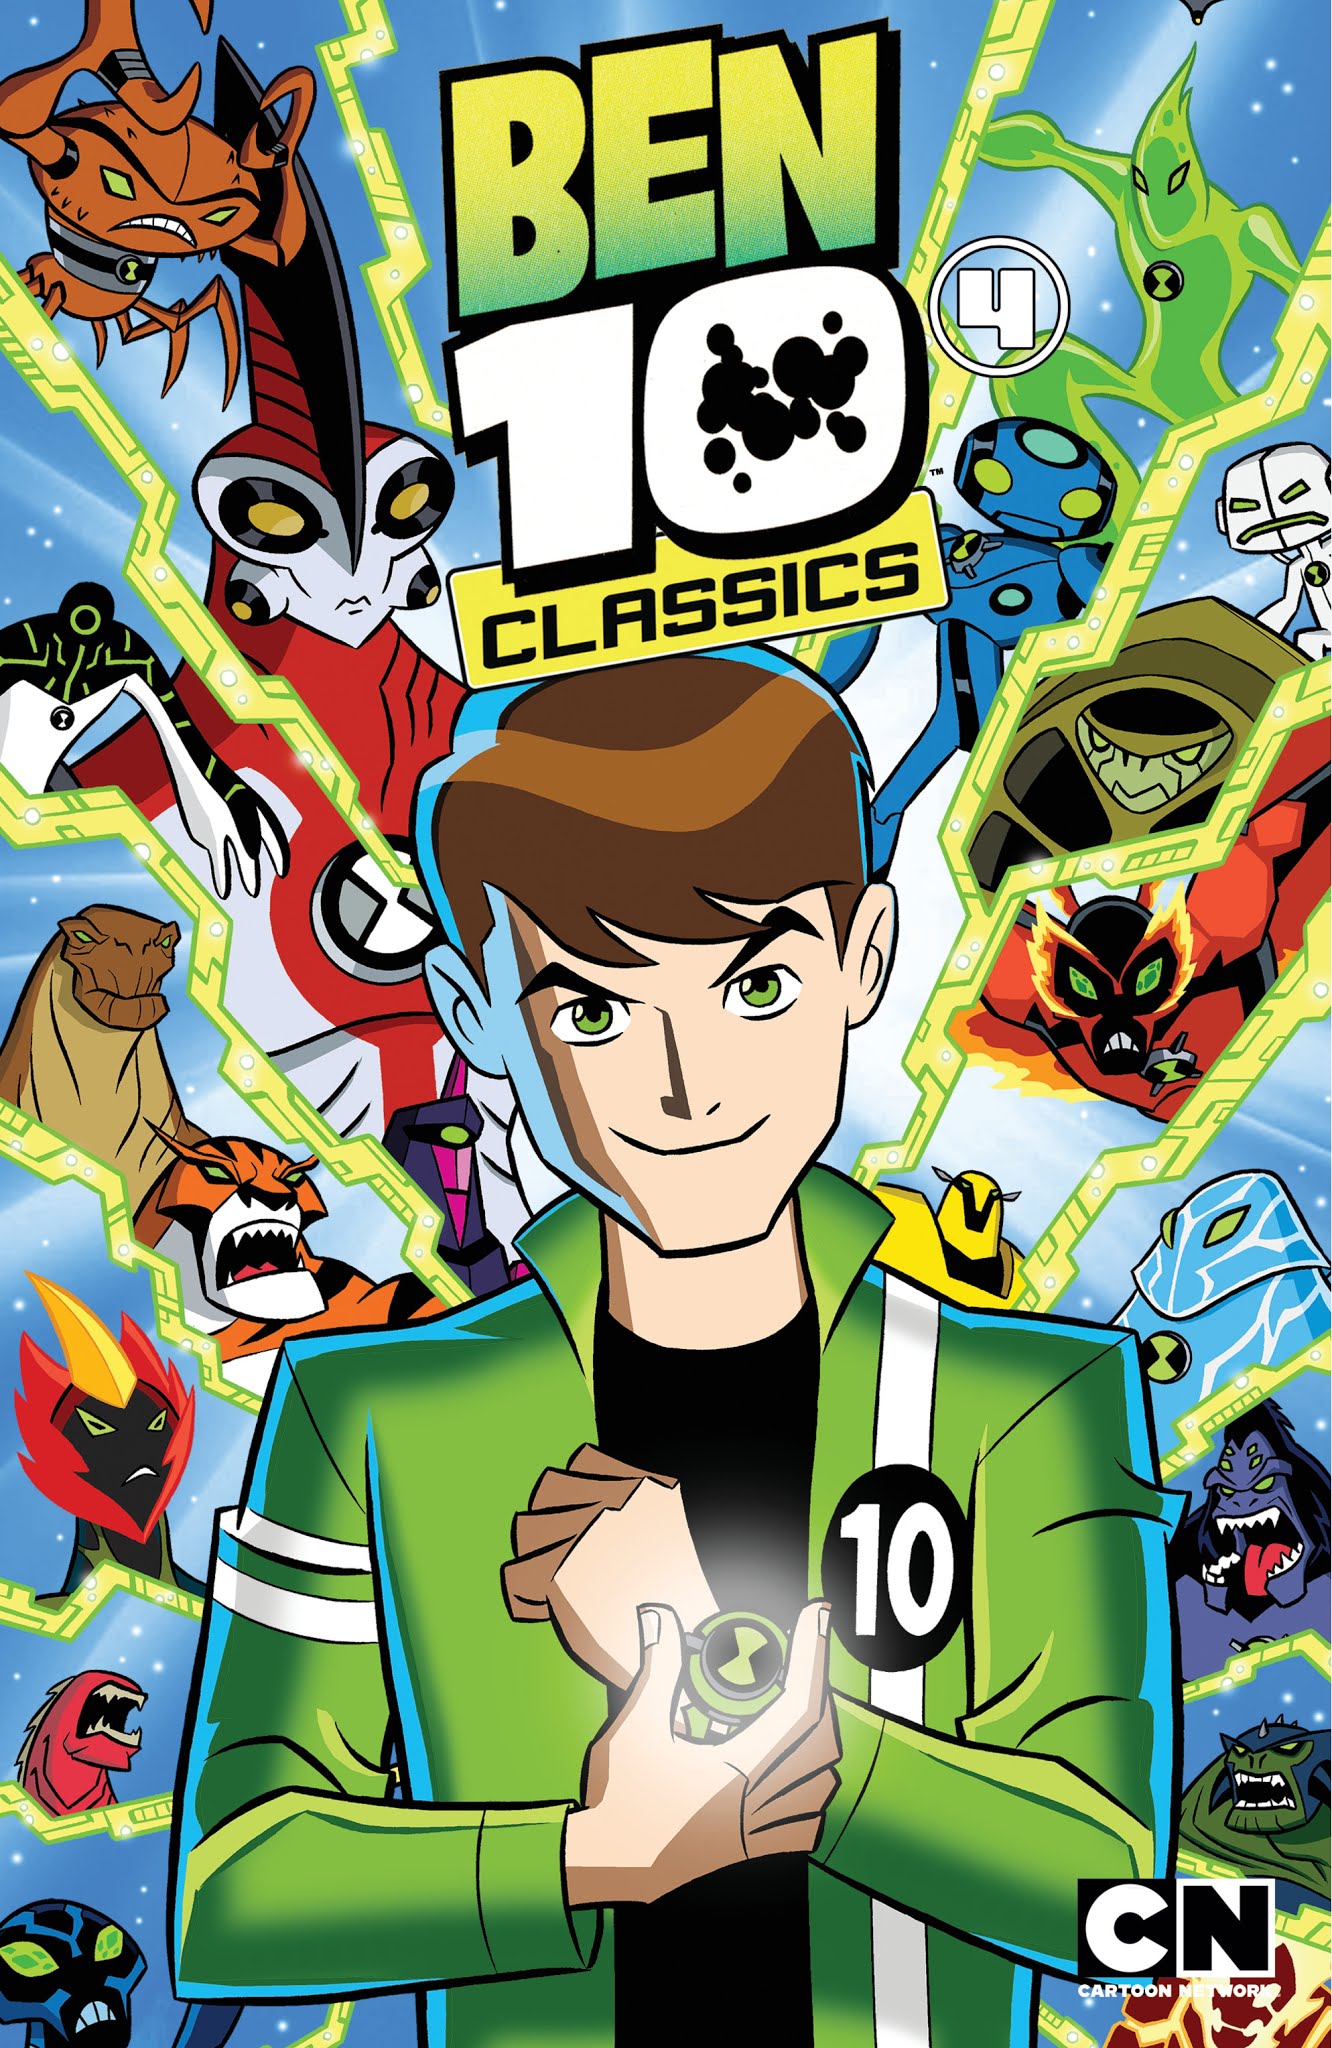 Ben 10 Classics Tpb 4 | Read Ben 10 Classics Tpb 4 comic online in high  quality. Read Full Comic online for free - Read comics online in high  quality .|viewcomiconline.com